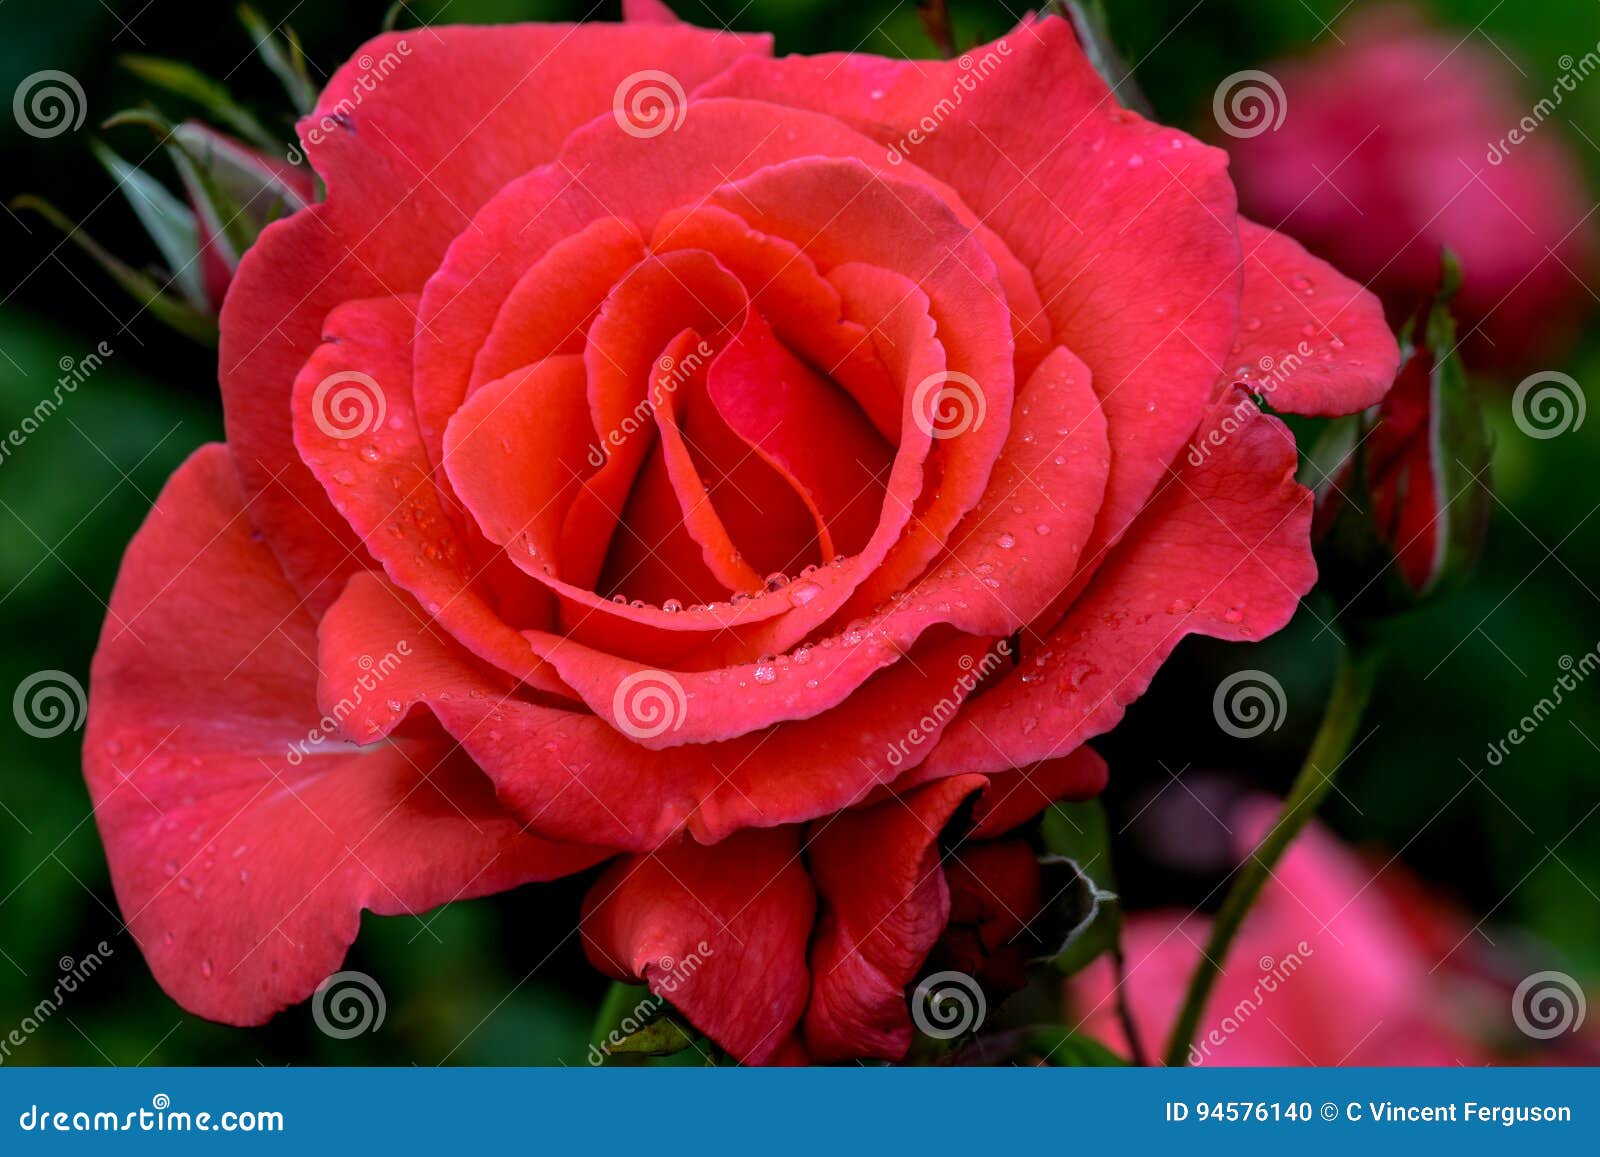 futura rose flower bud